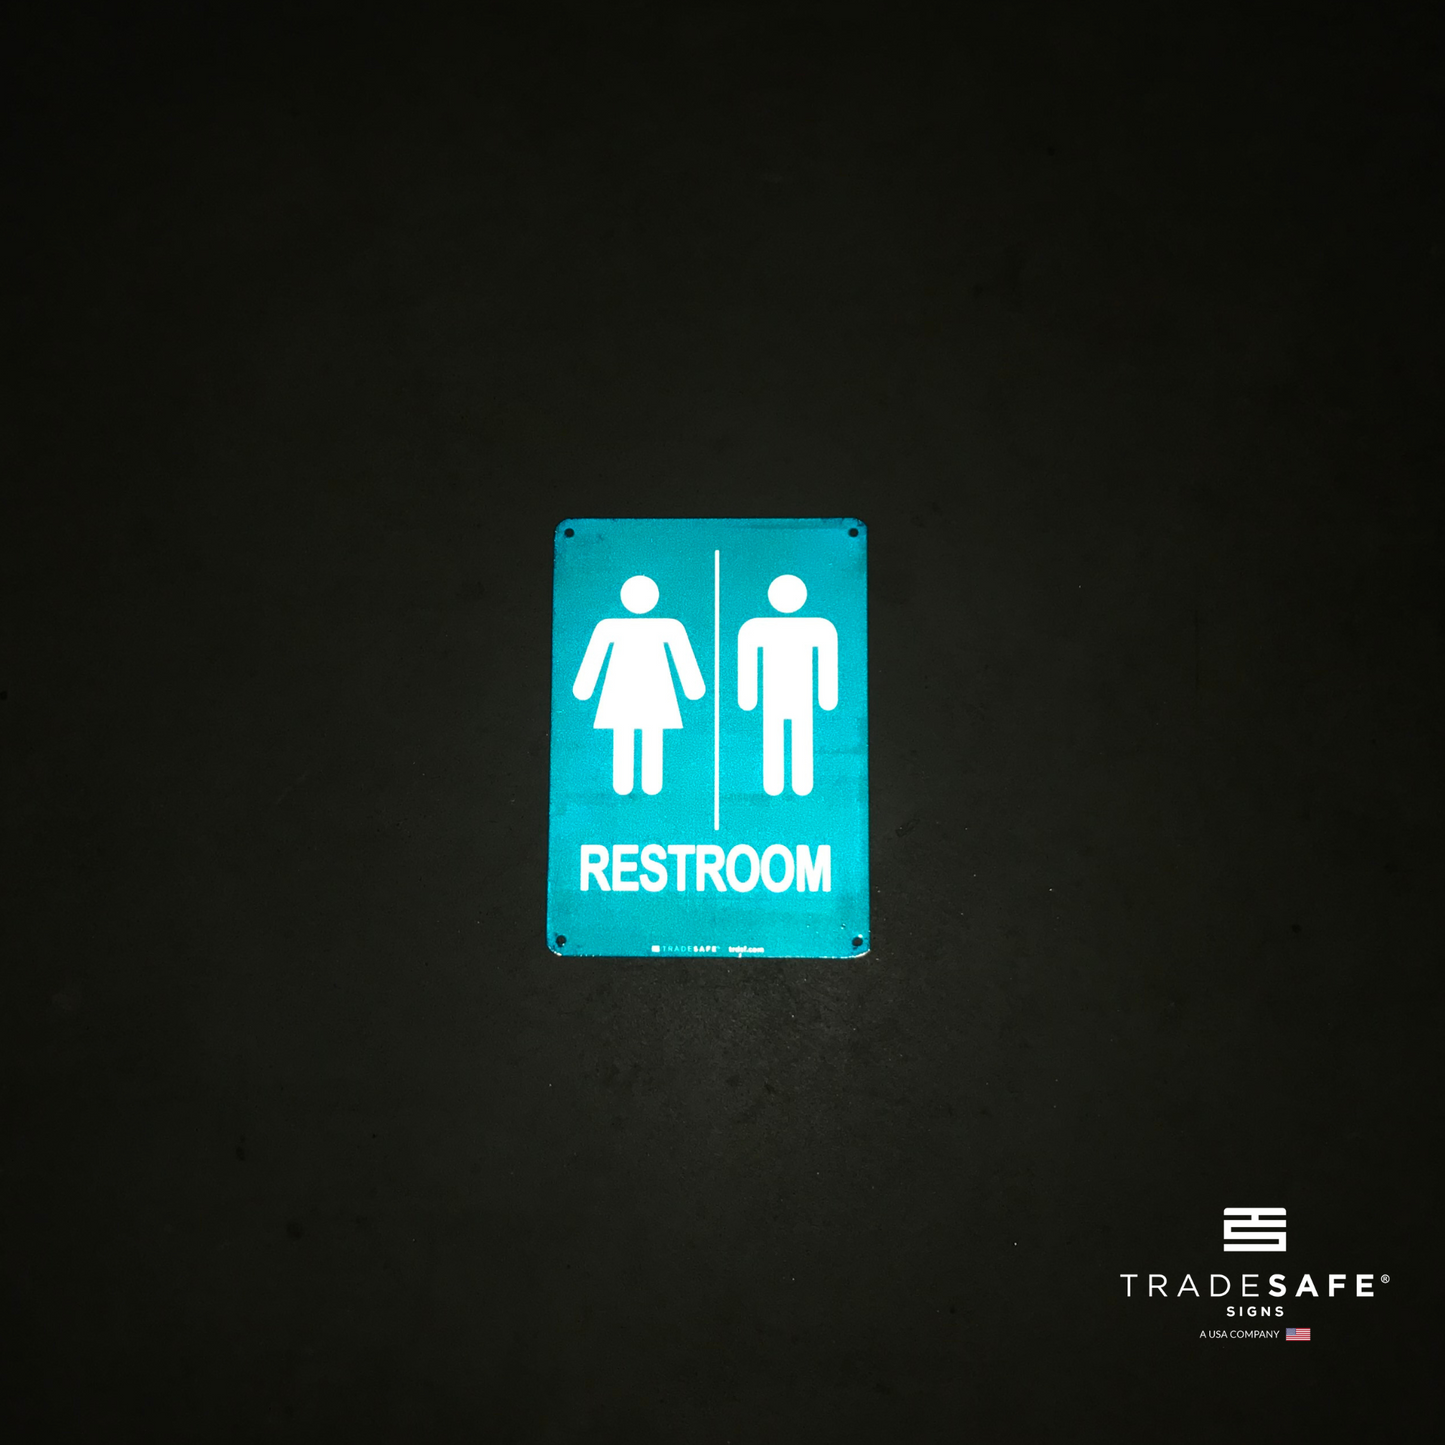 reflective attribute of unisex restroom sign on black background